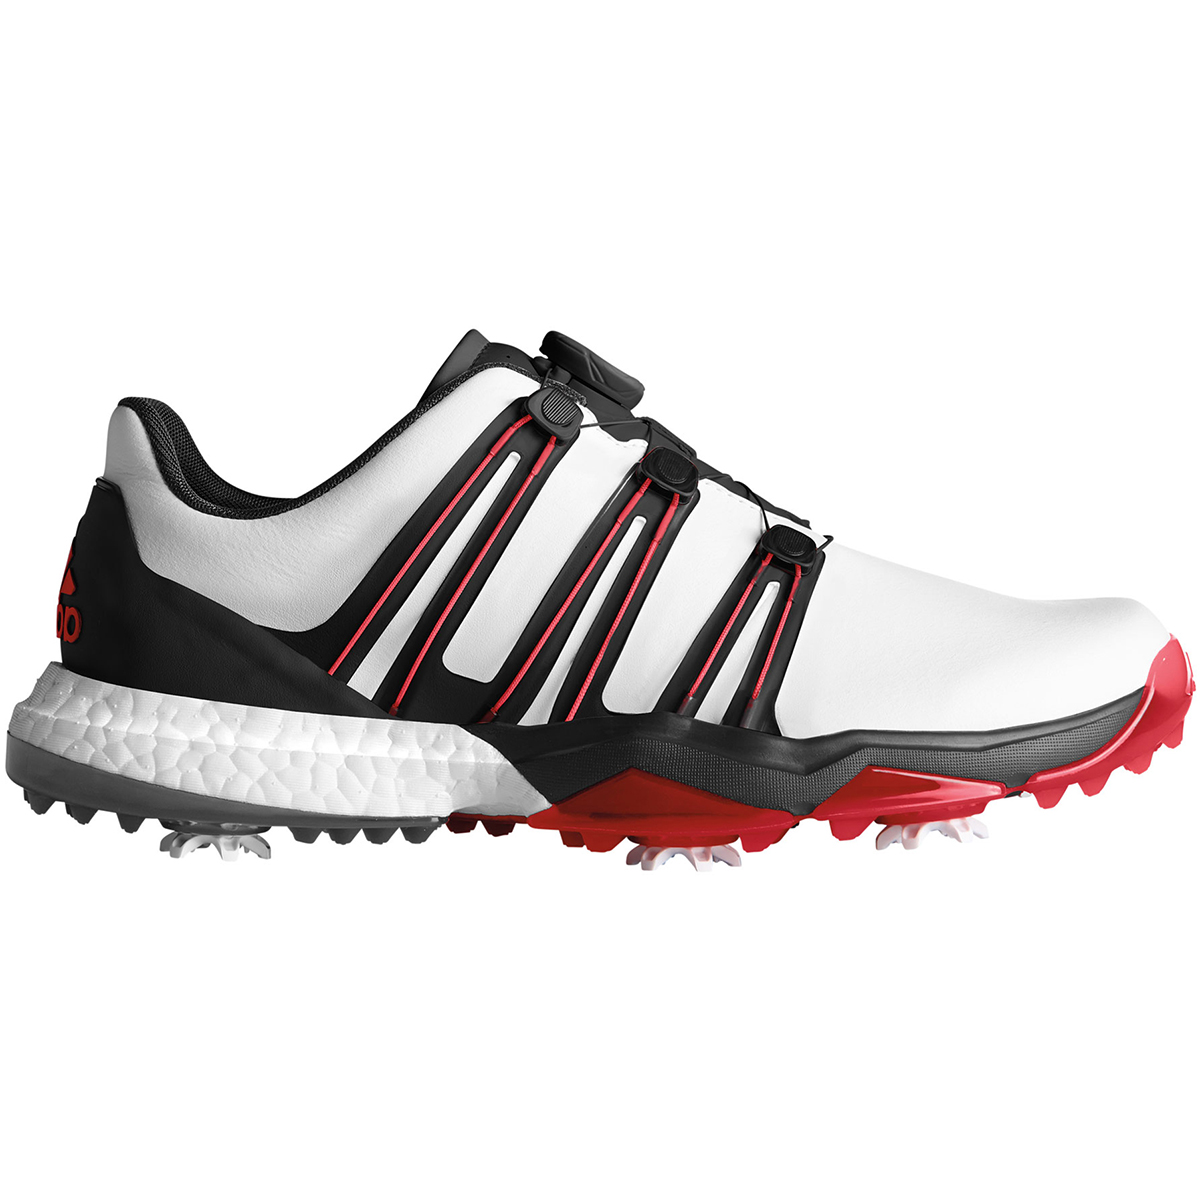 adidas powerband boa golf shoes